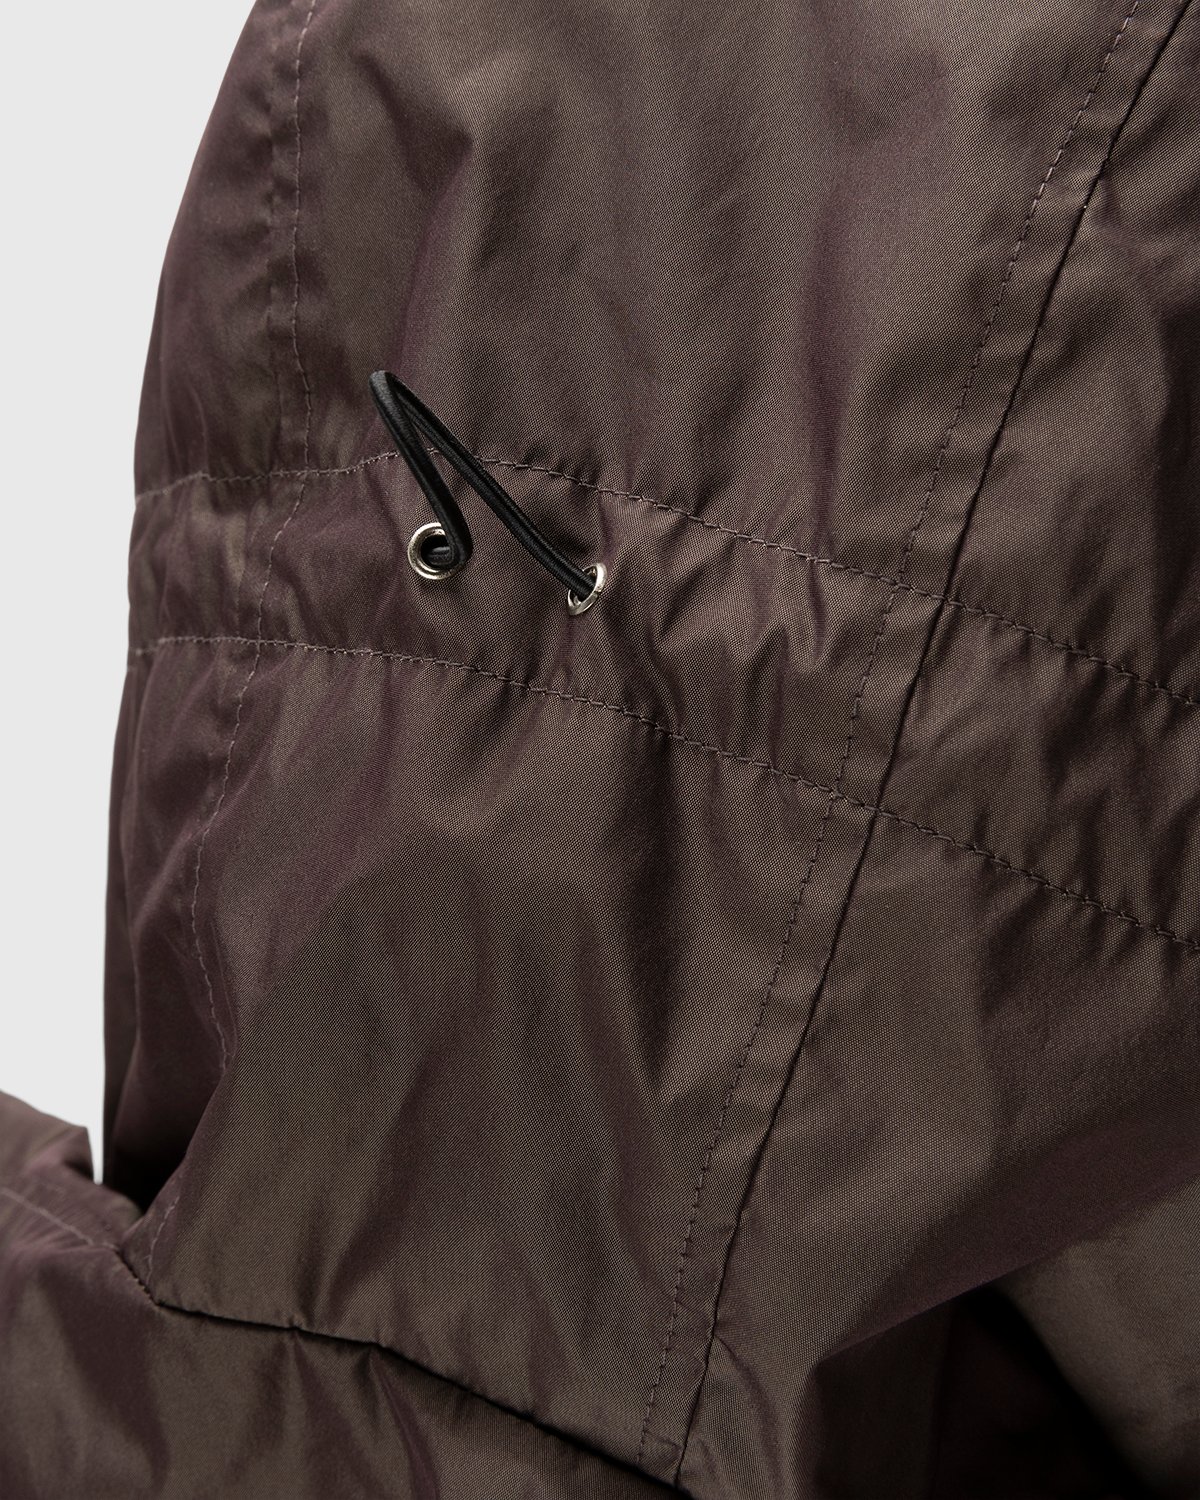 Arnar Mar Jonsson - Texlon Composition Outerwear Jacket Beige Chocolate Black - Clothing - Black - Image 7